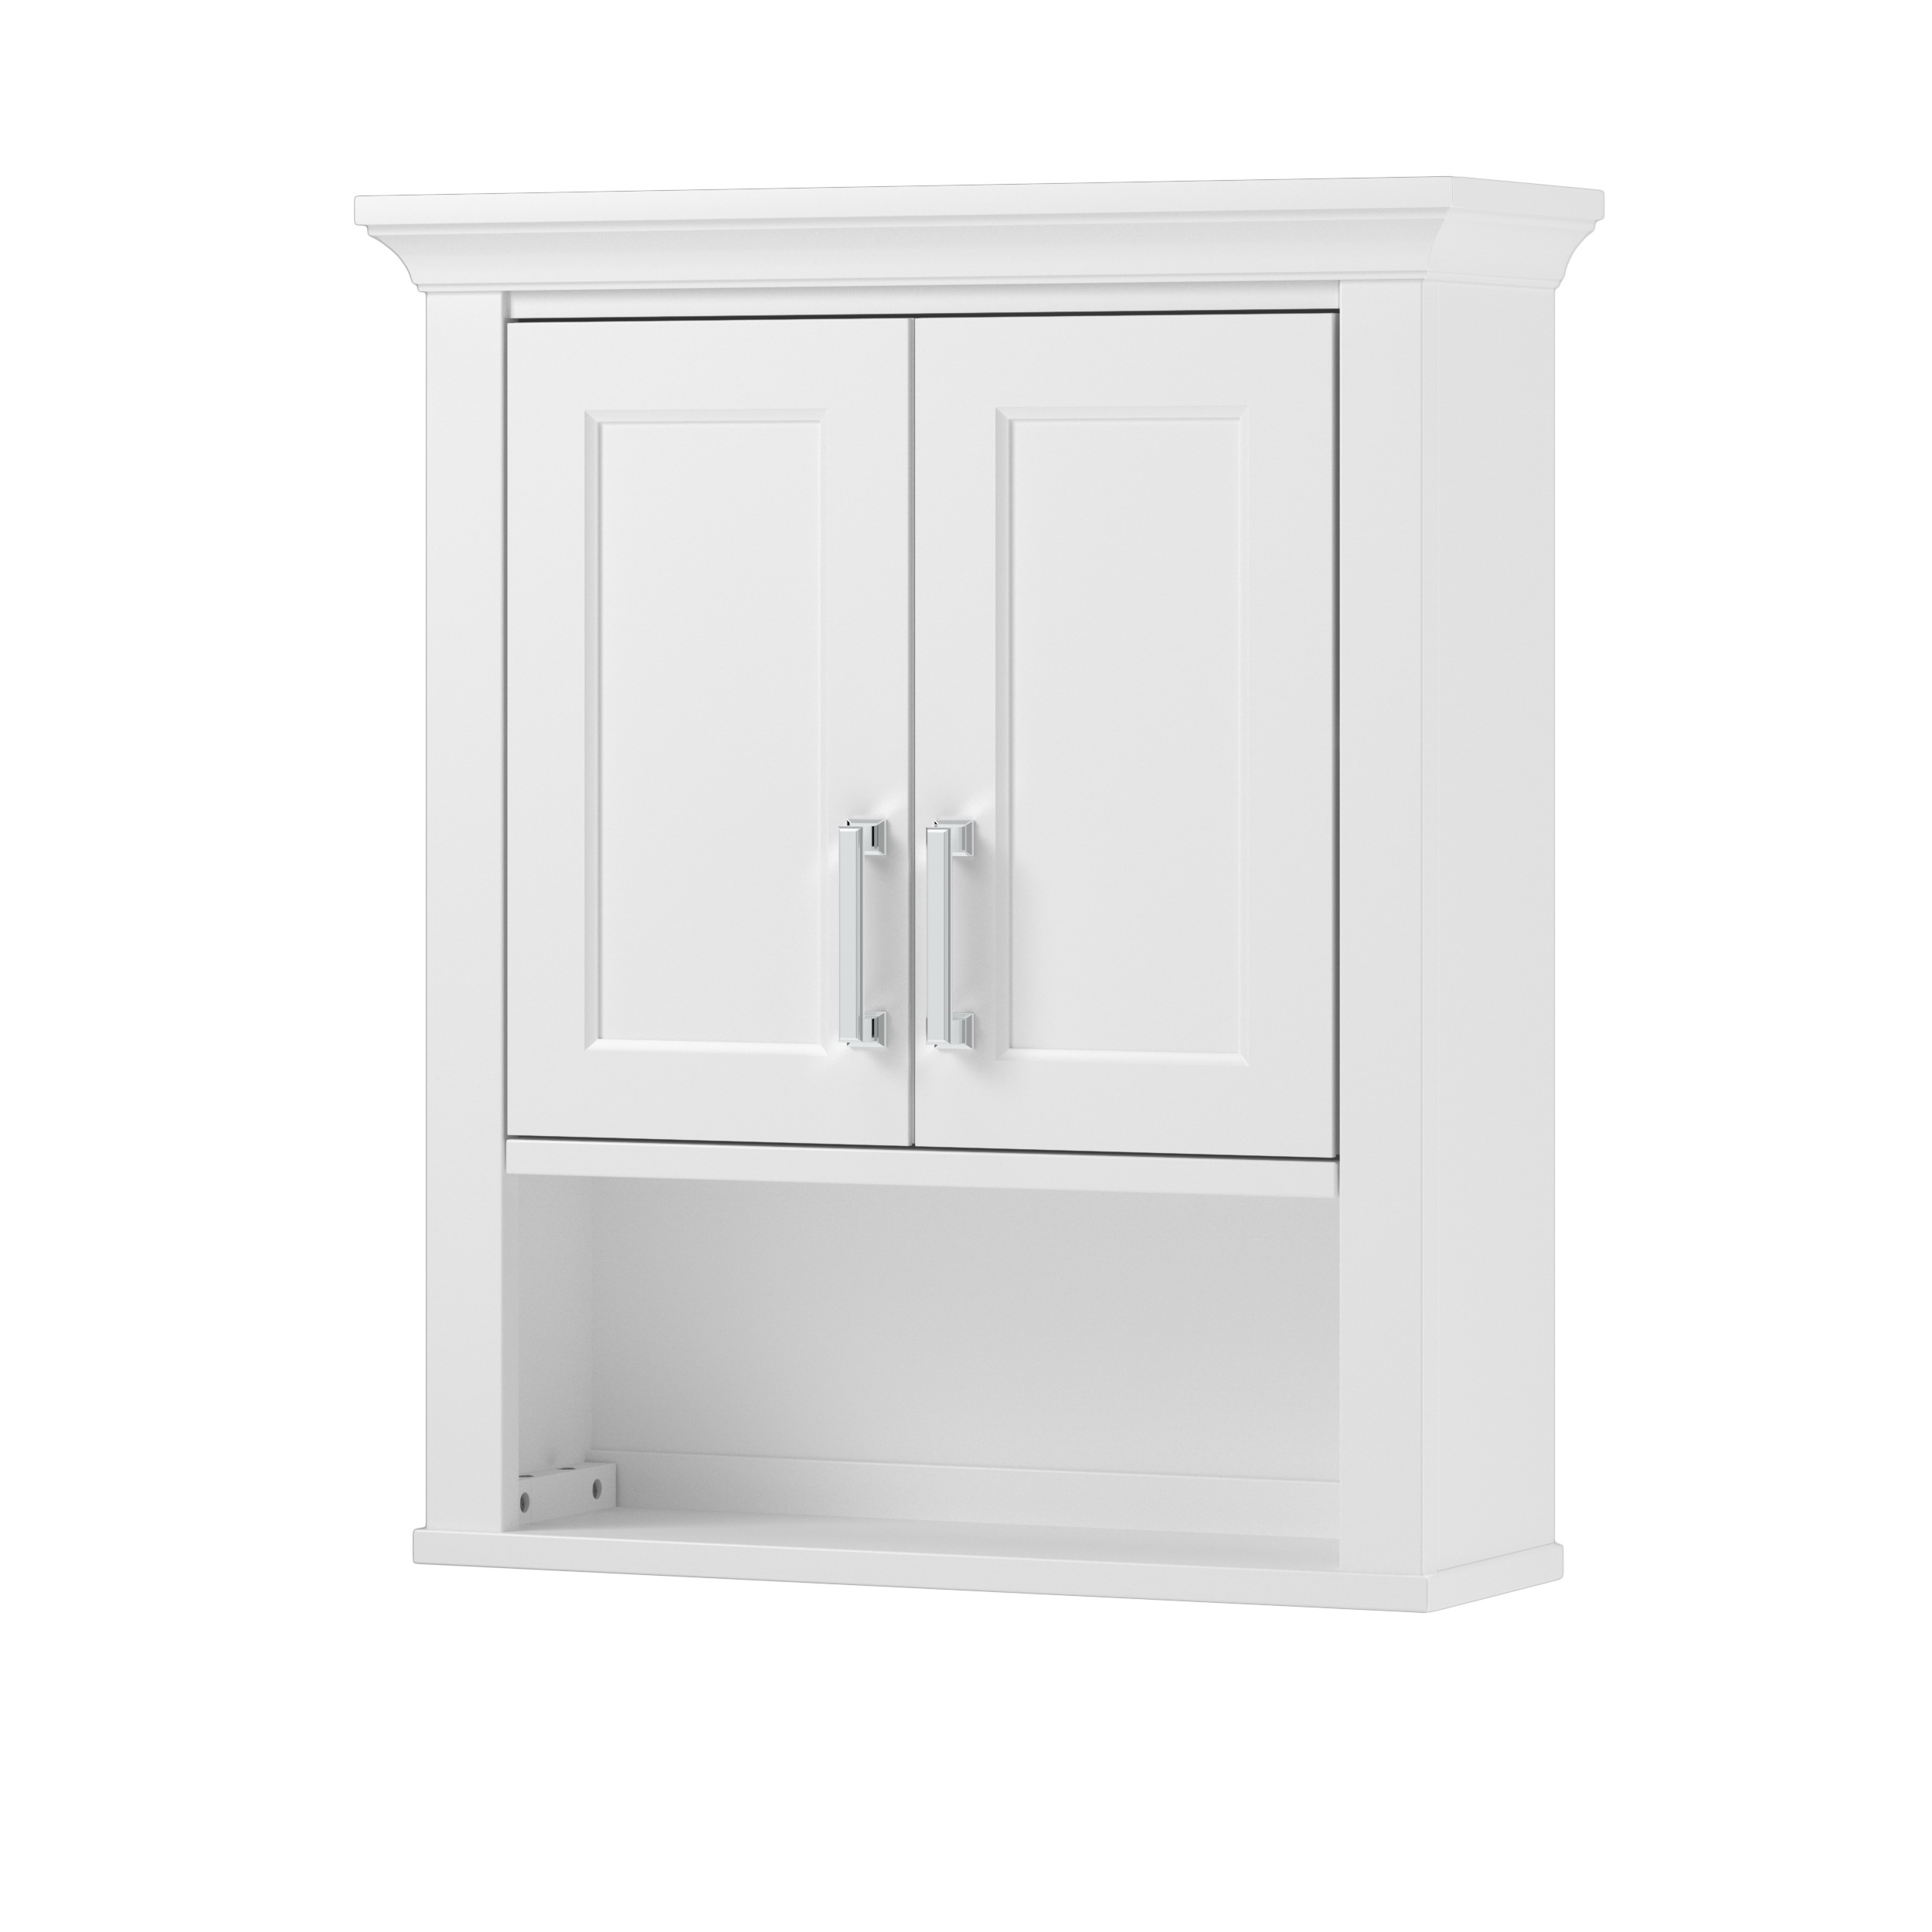 Hollis Series HOWW2428 Bathroom Cabinet, 2-Door, 1-Shelf, Wood, White